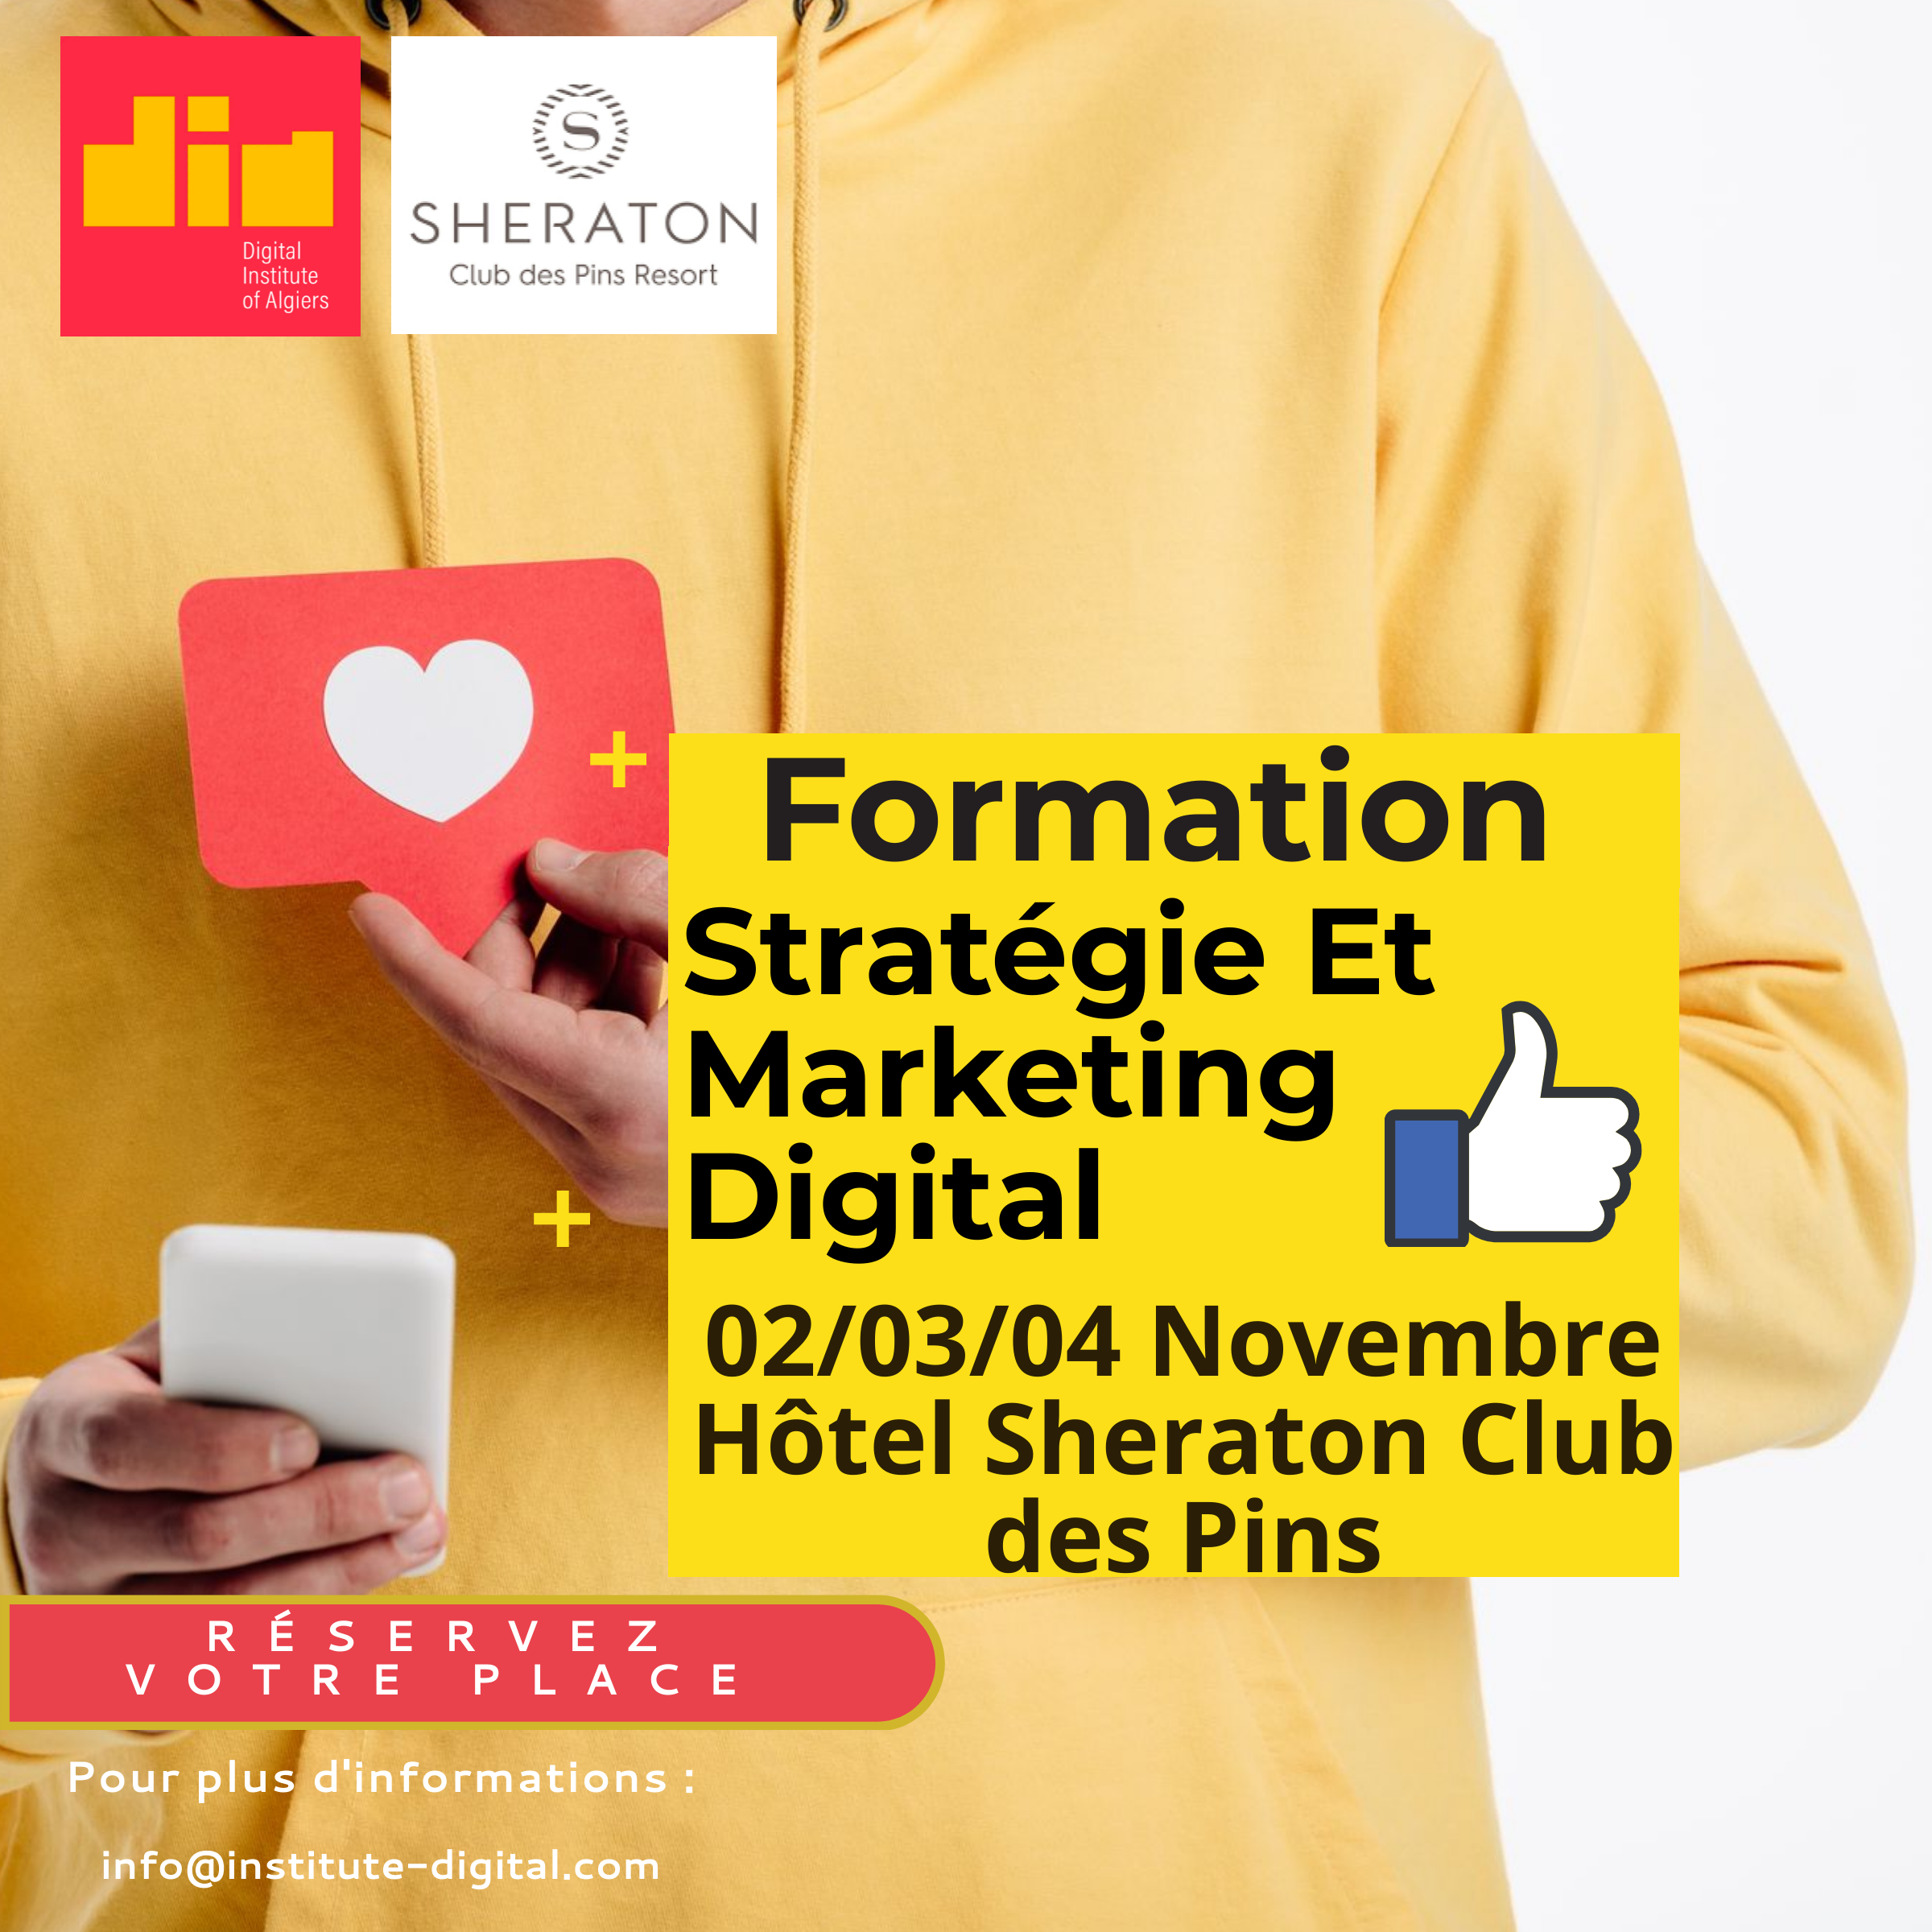 Formation / Workshop 👨‍🏫: Stratégie Et Marketing Digital (02/03/04 Novembre au Sheraton Club des Pins Resort)